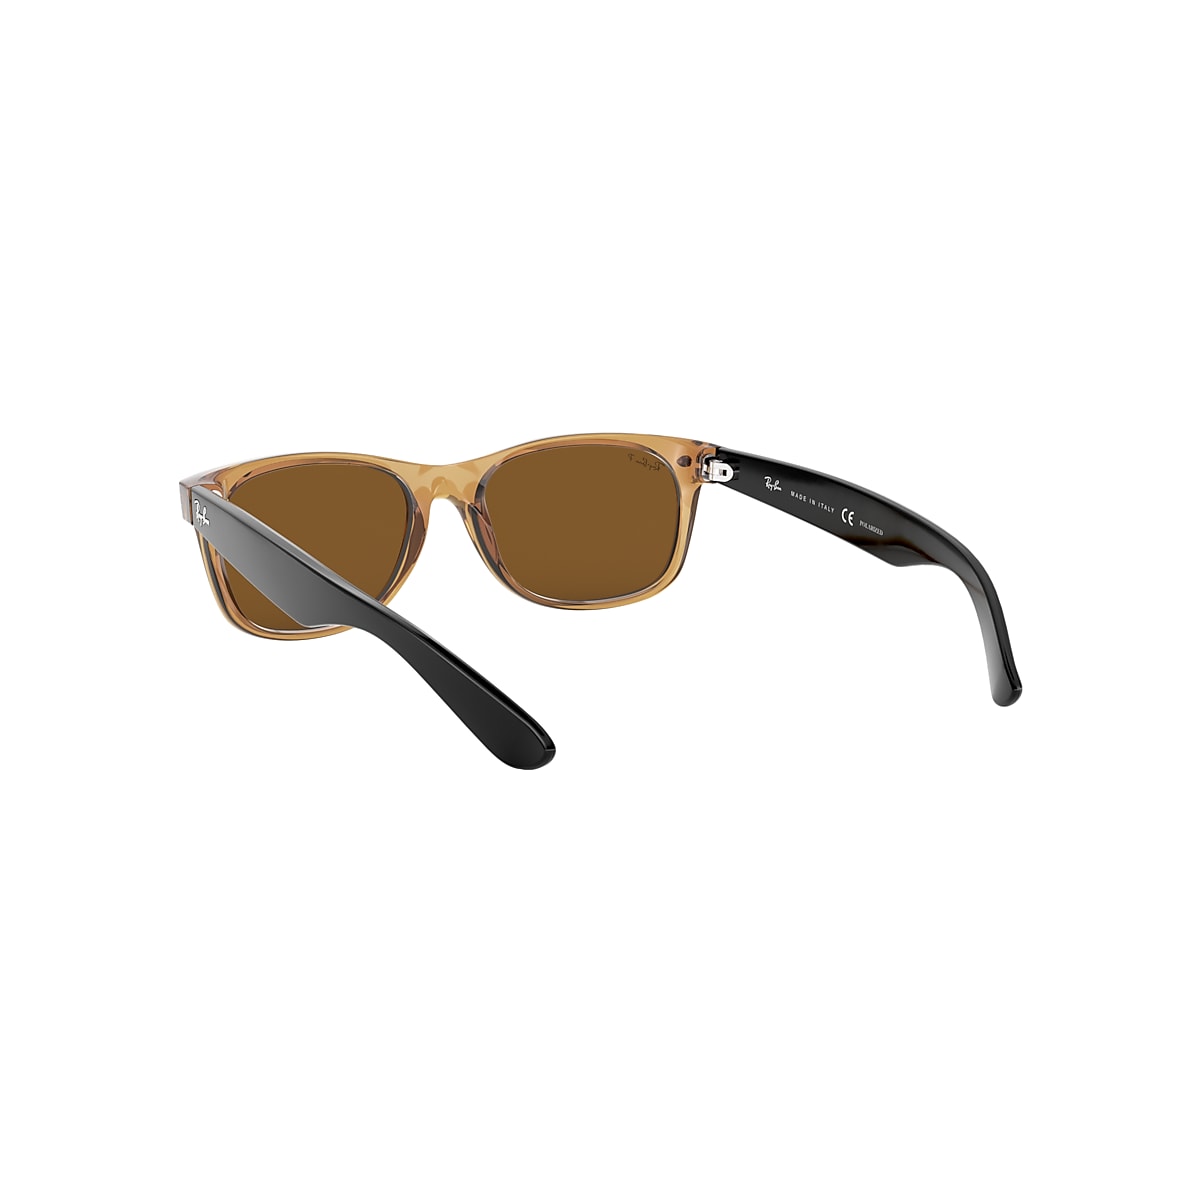 Ray-Ban RB2132 New Wayfarer Bicolor Sunglasses with Black Frame